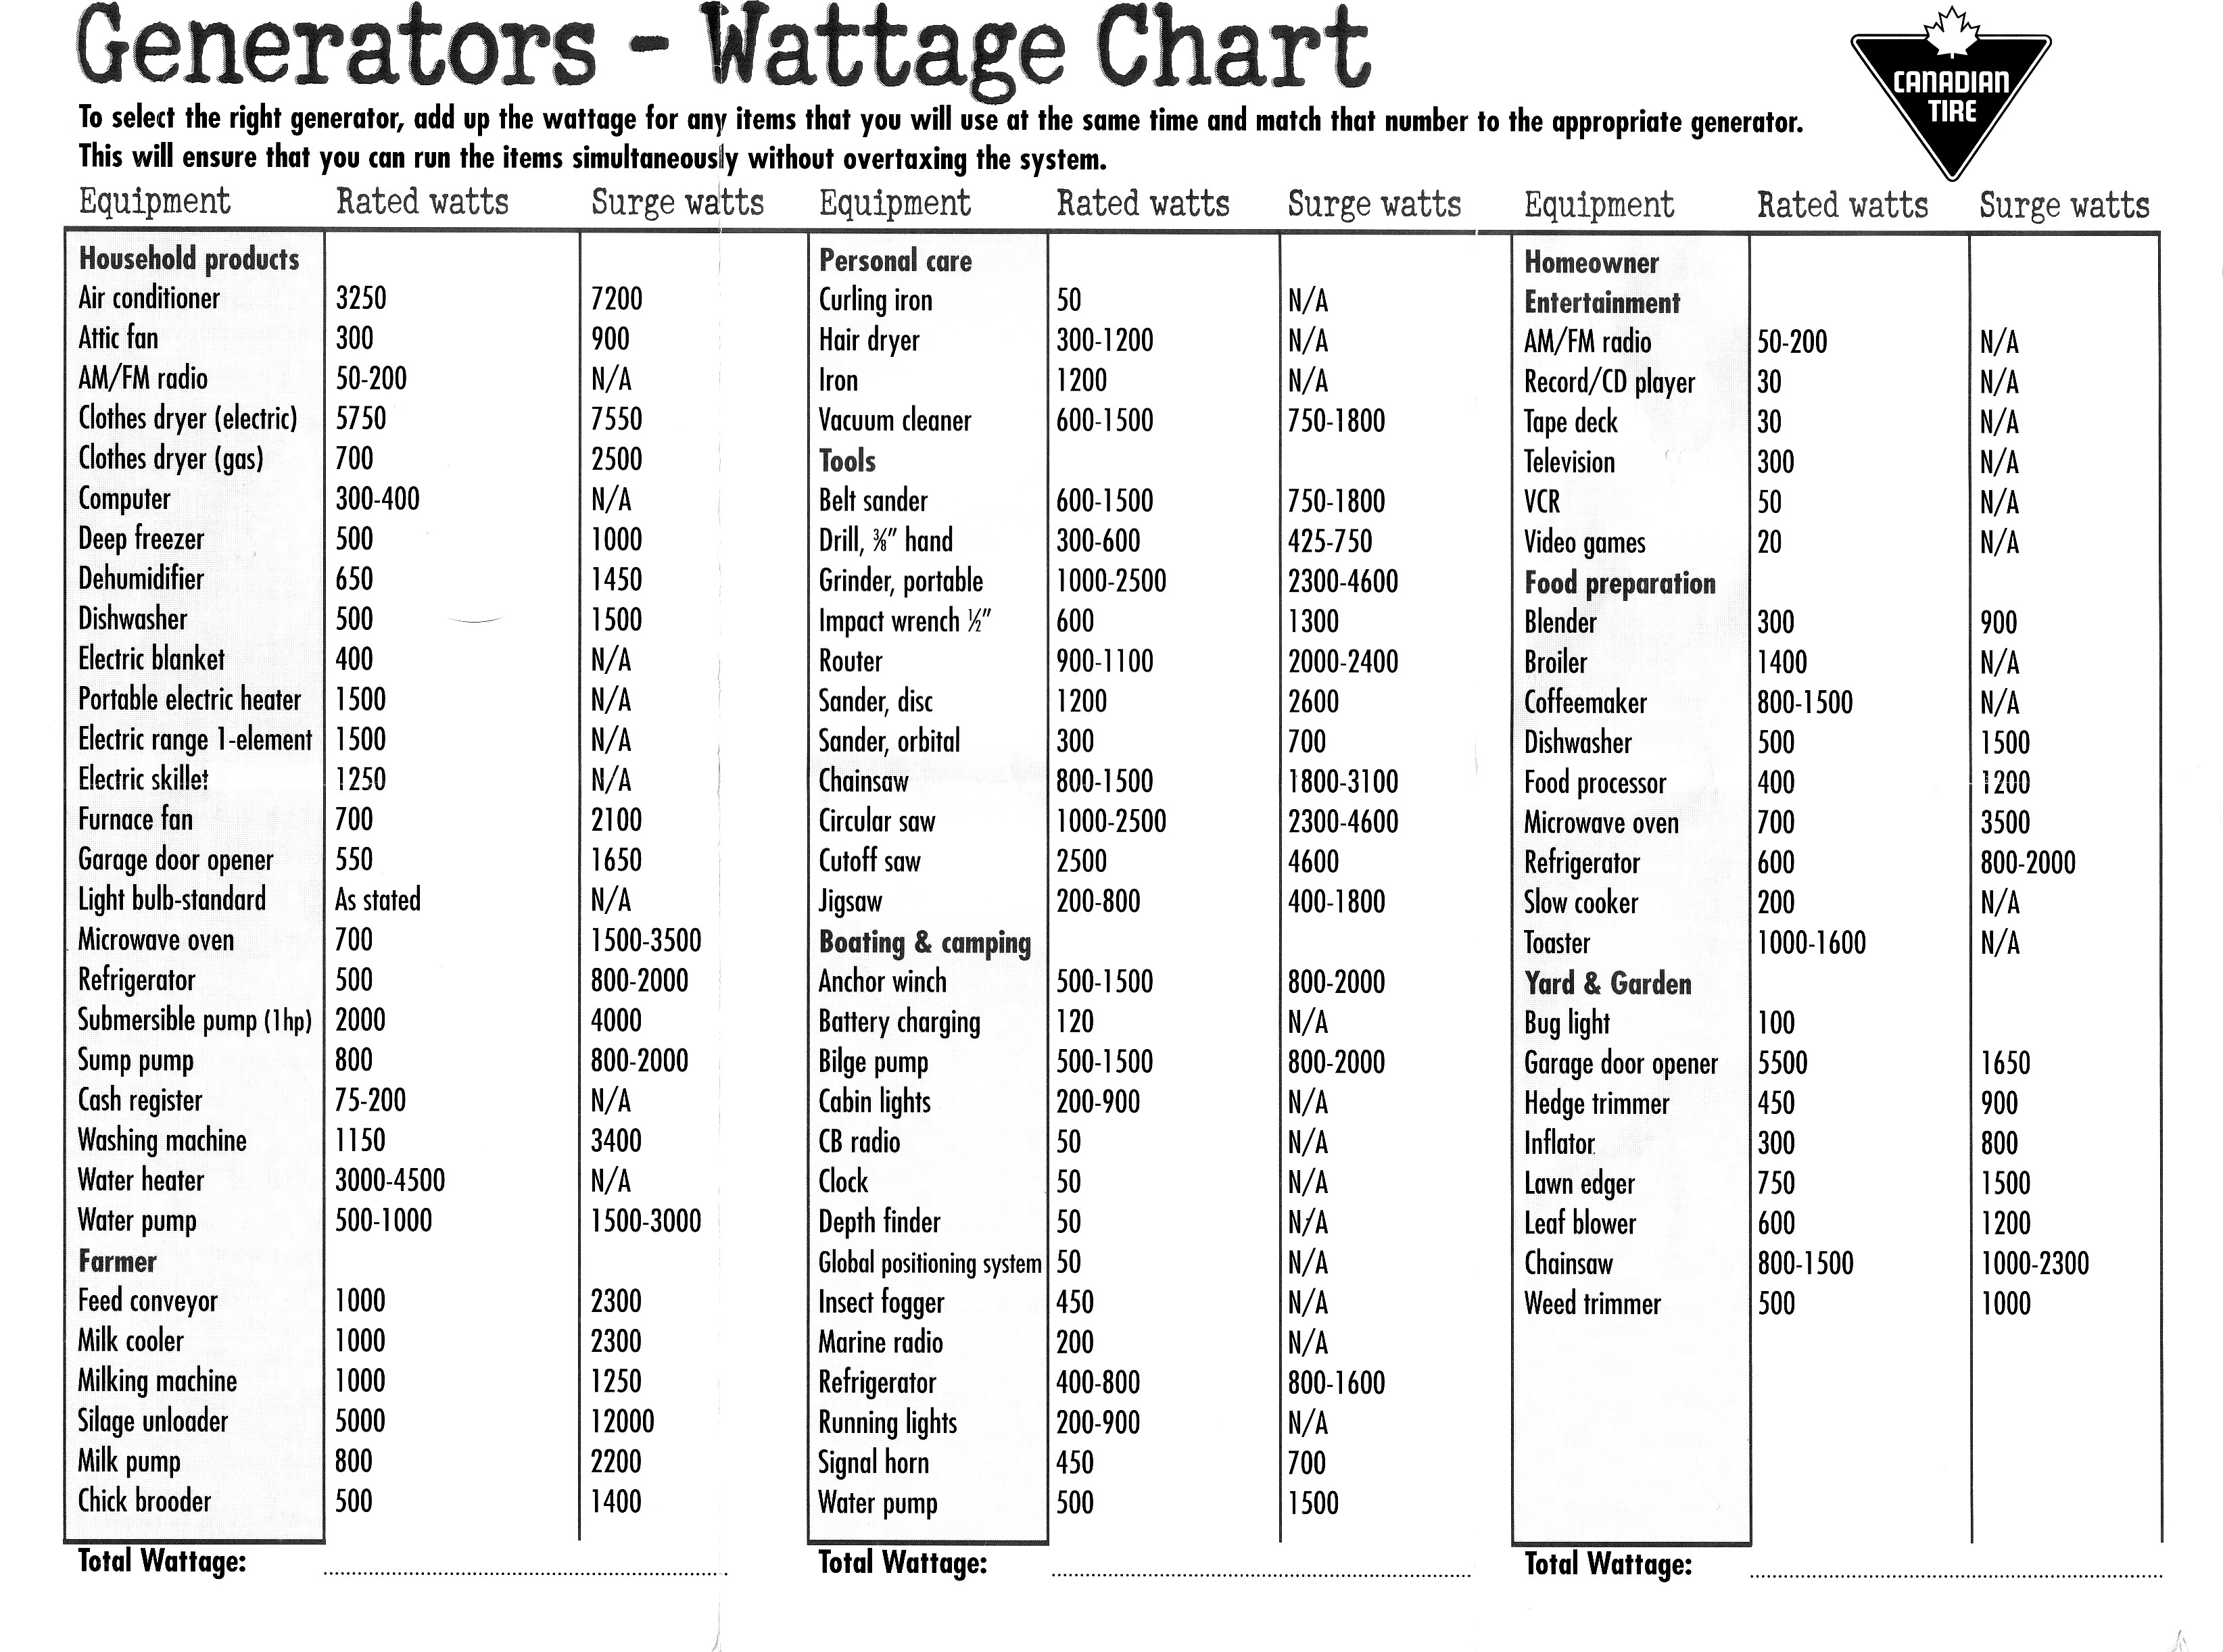 Honda generator power chart #6